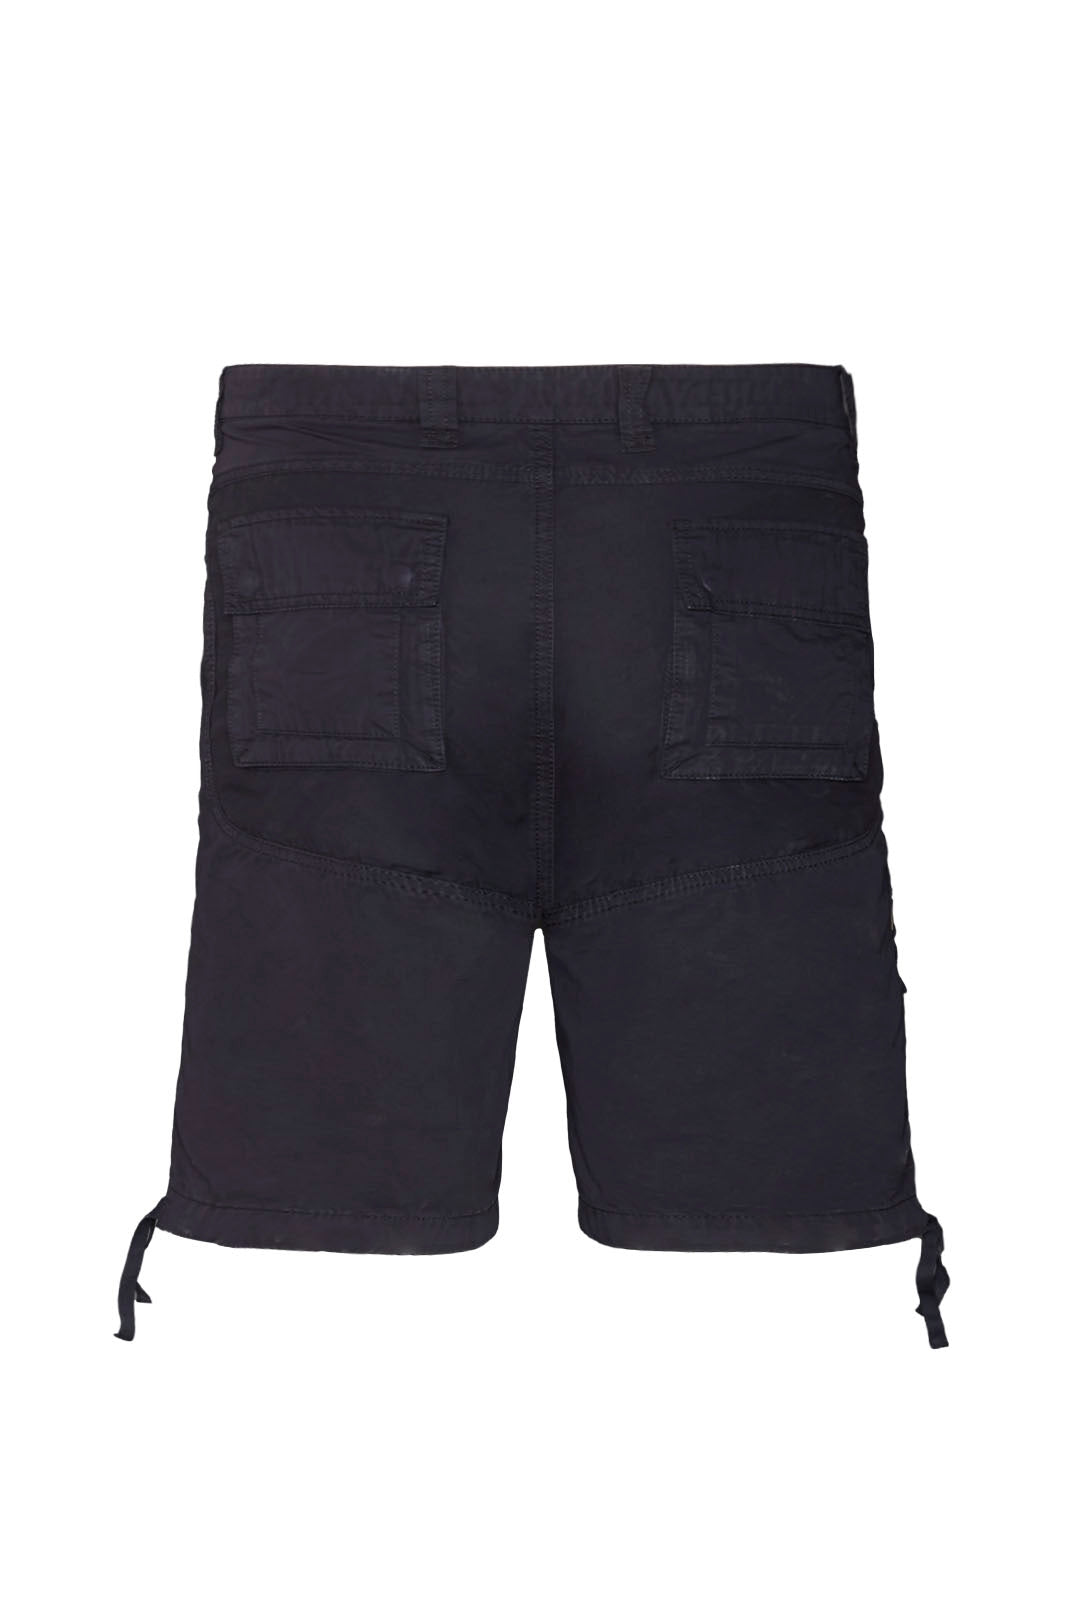 Iconic Anti-G gabardine bermuda shorts